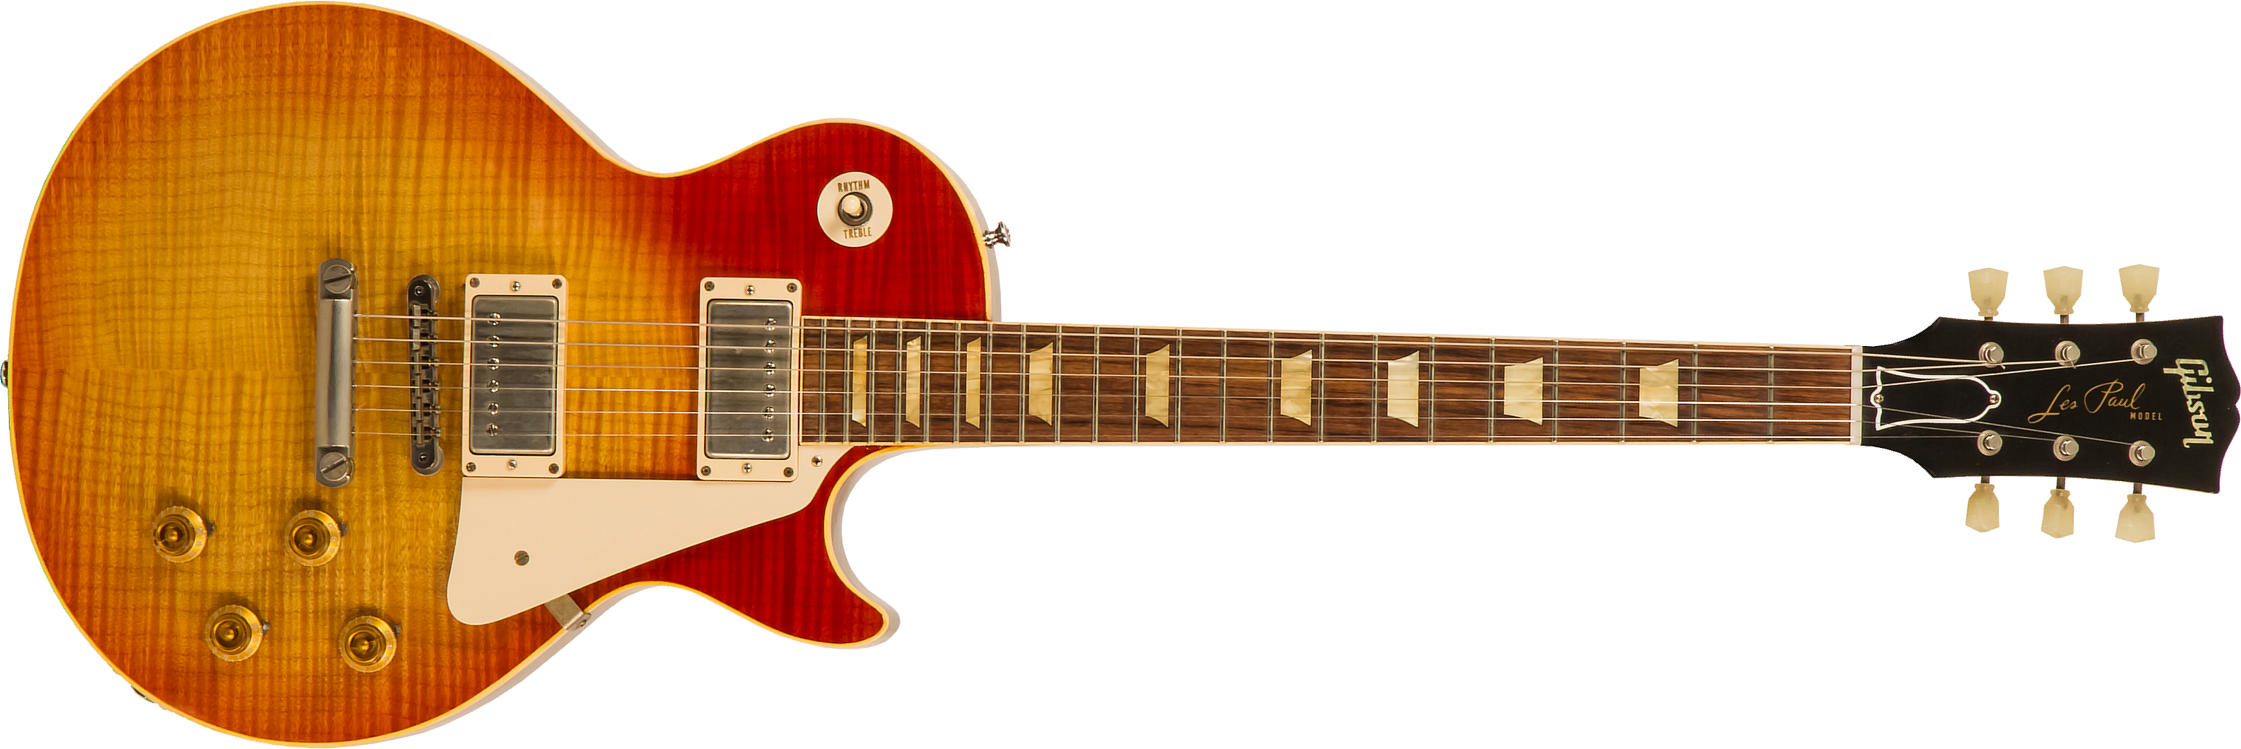 Gibson Custom Shop Les Paul Les Paul 1959 Southern Rock Tribute 2h Rw #srt0021 - Vos Reverse Burst - Enkel gesneden elektrische gitaar - Main picture